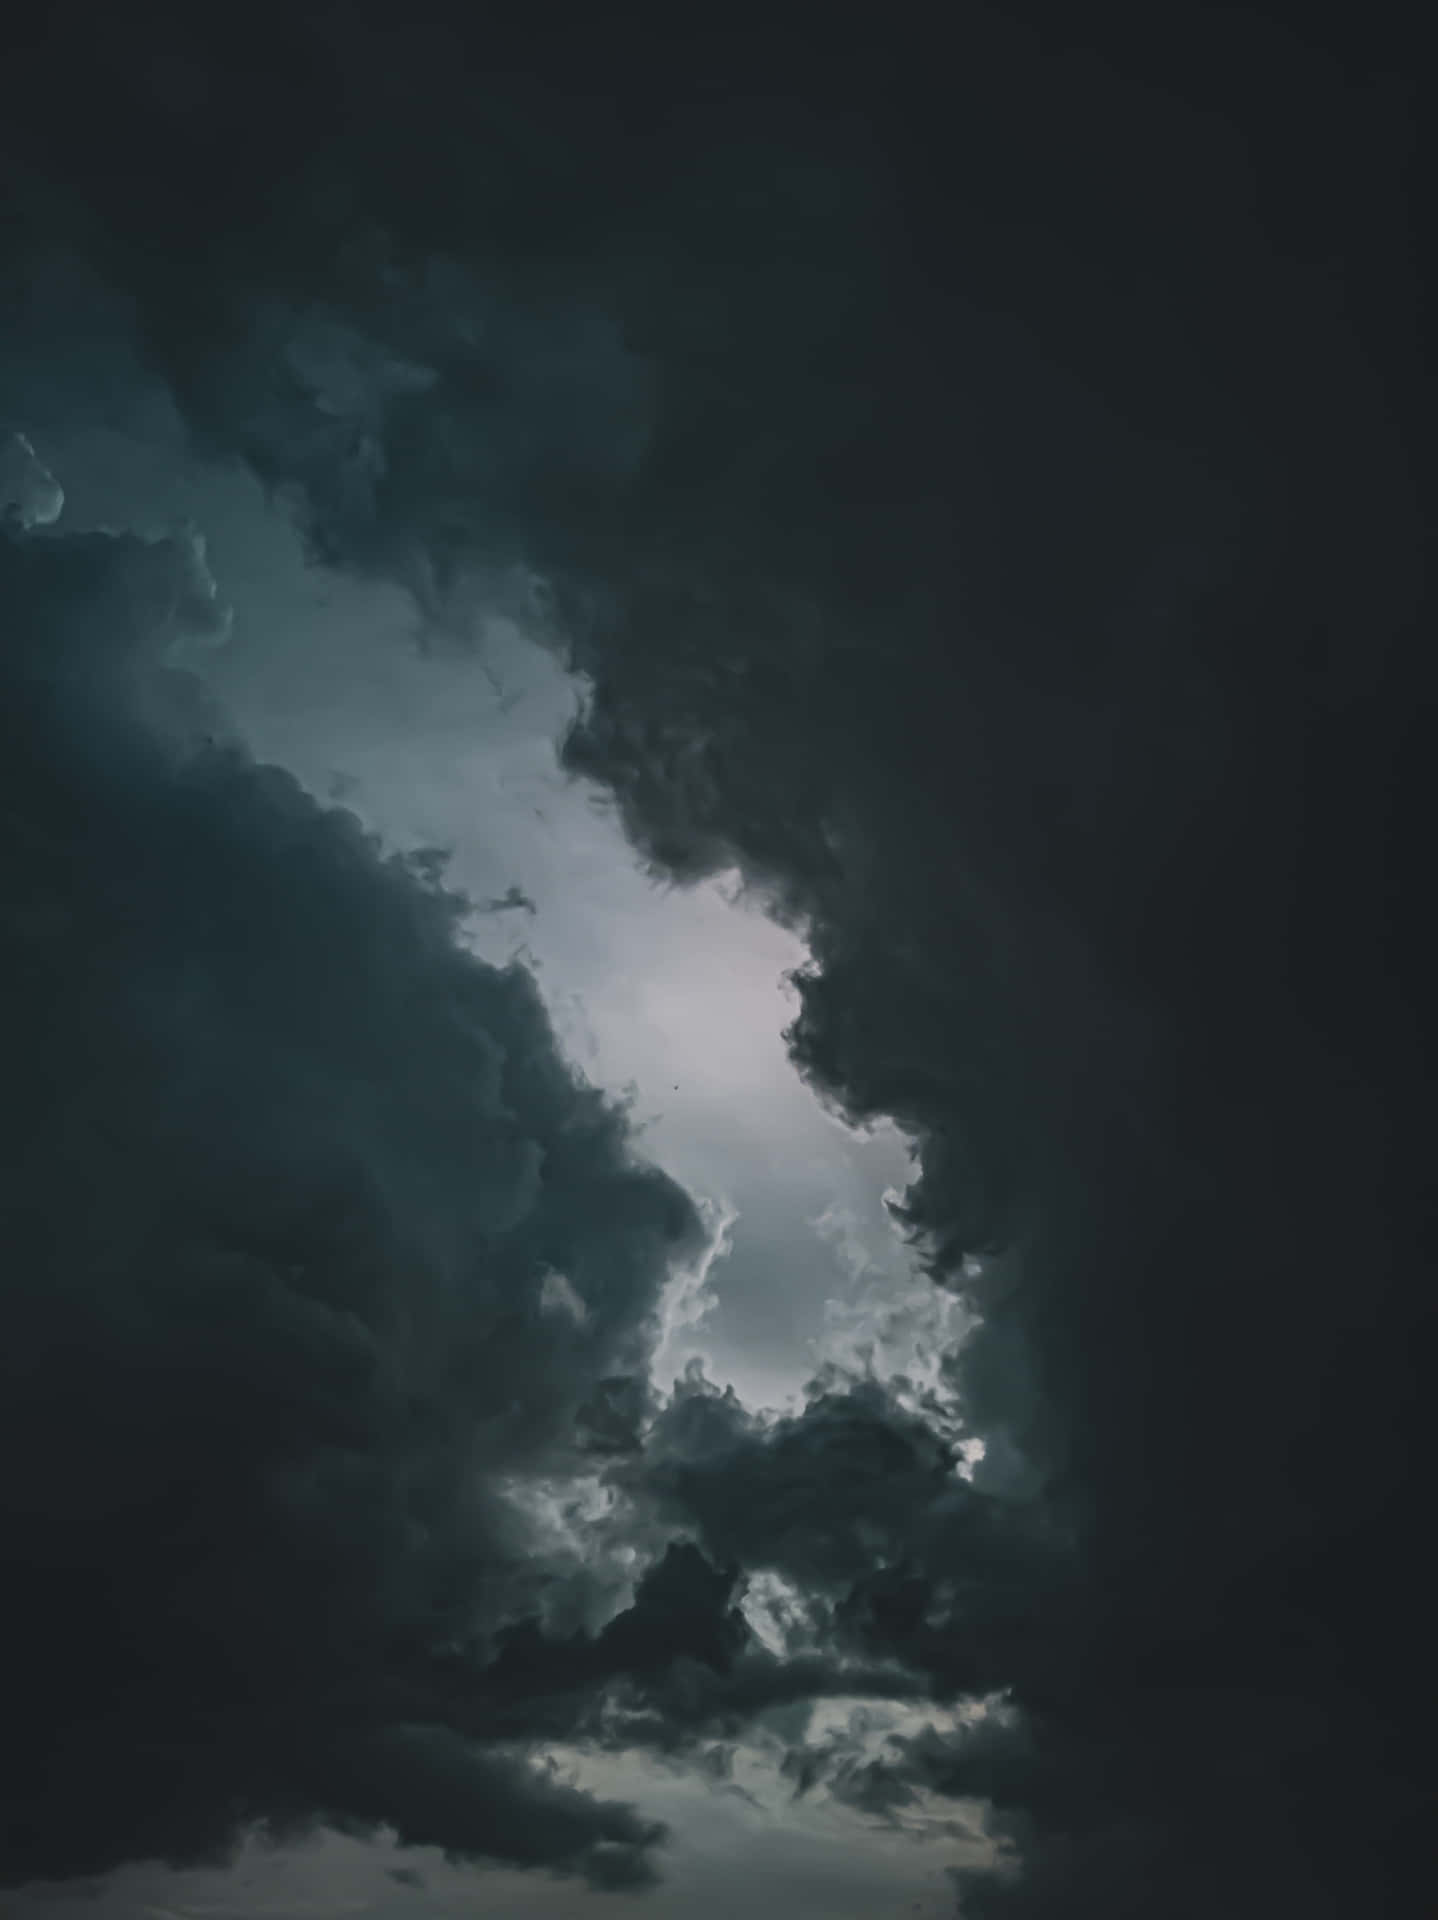 Uncielo Scuro E Nuvoloso Sopra Di Noi Crea Un'atmosfera Misteriosa